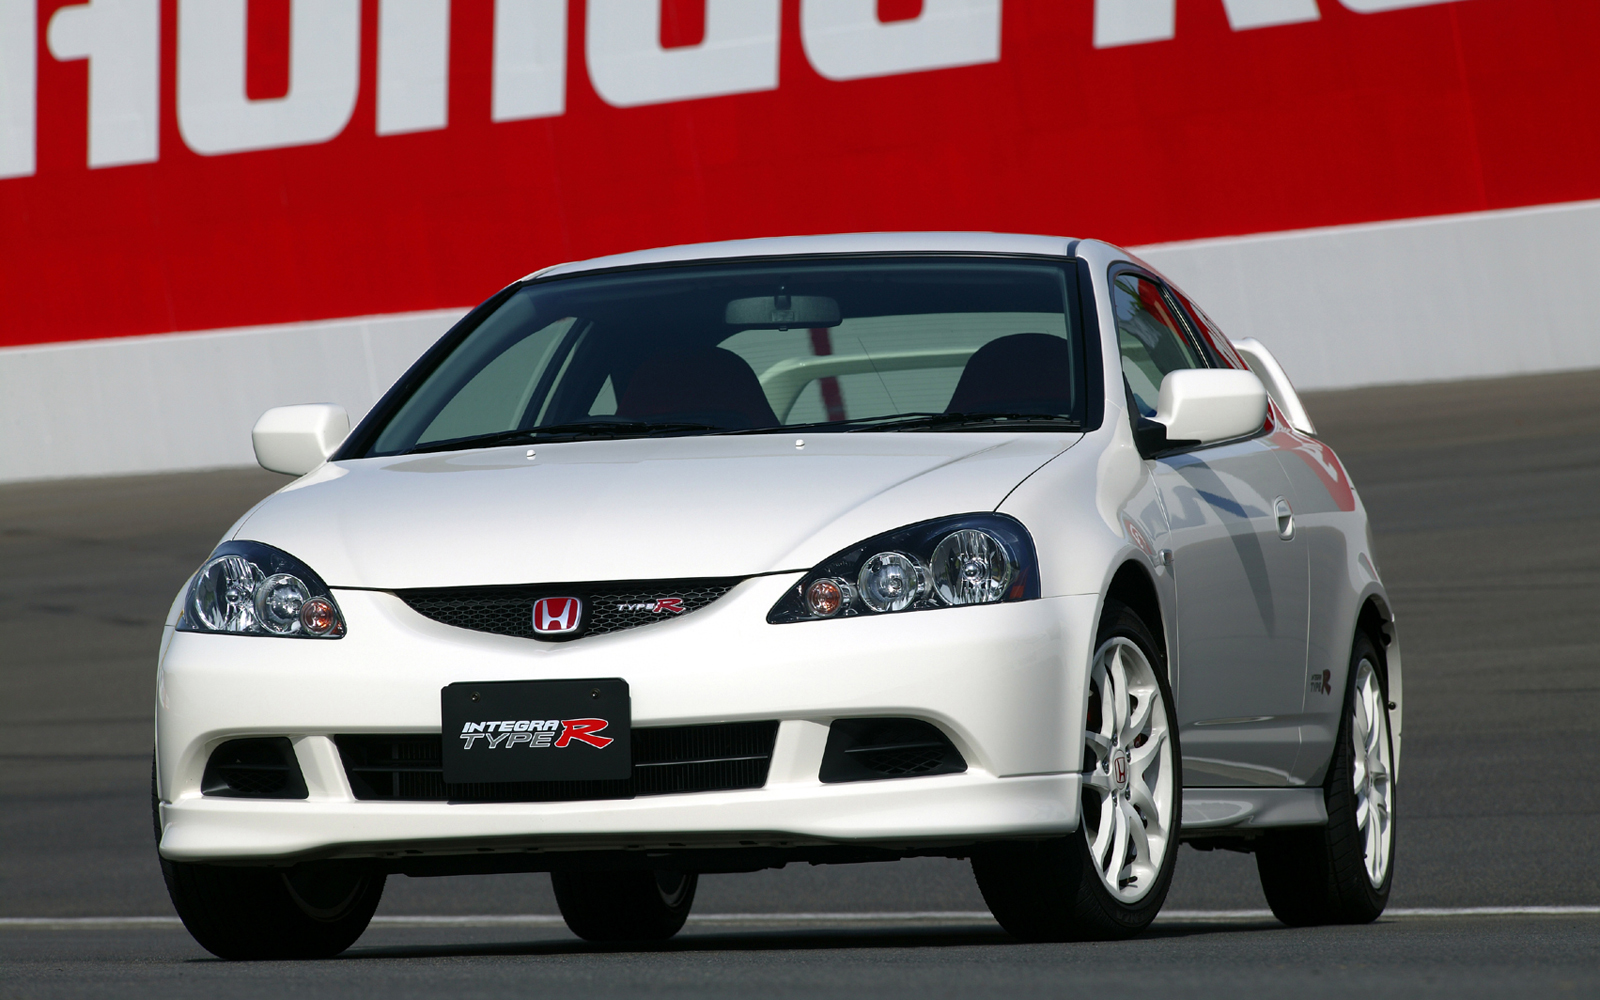 Honda челябинск. Honda Integra Type r dc4. Honda Integra Type r 2004. Honda Integra Type r 4 поколения. Хонда Интегра 2004 тайп р.